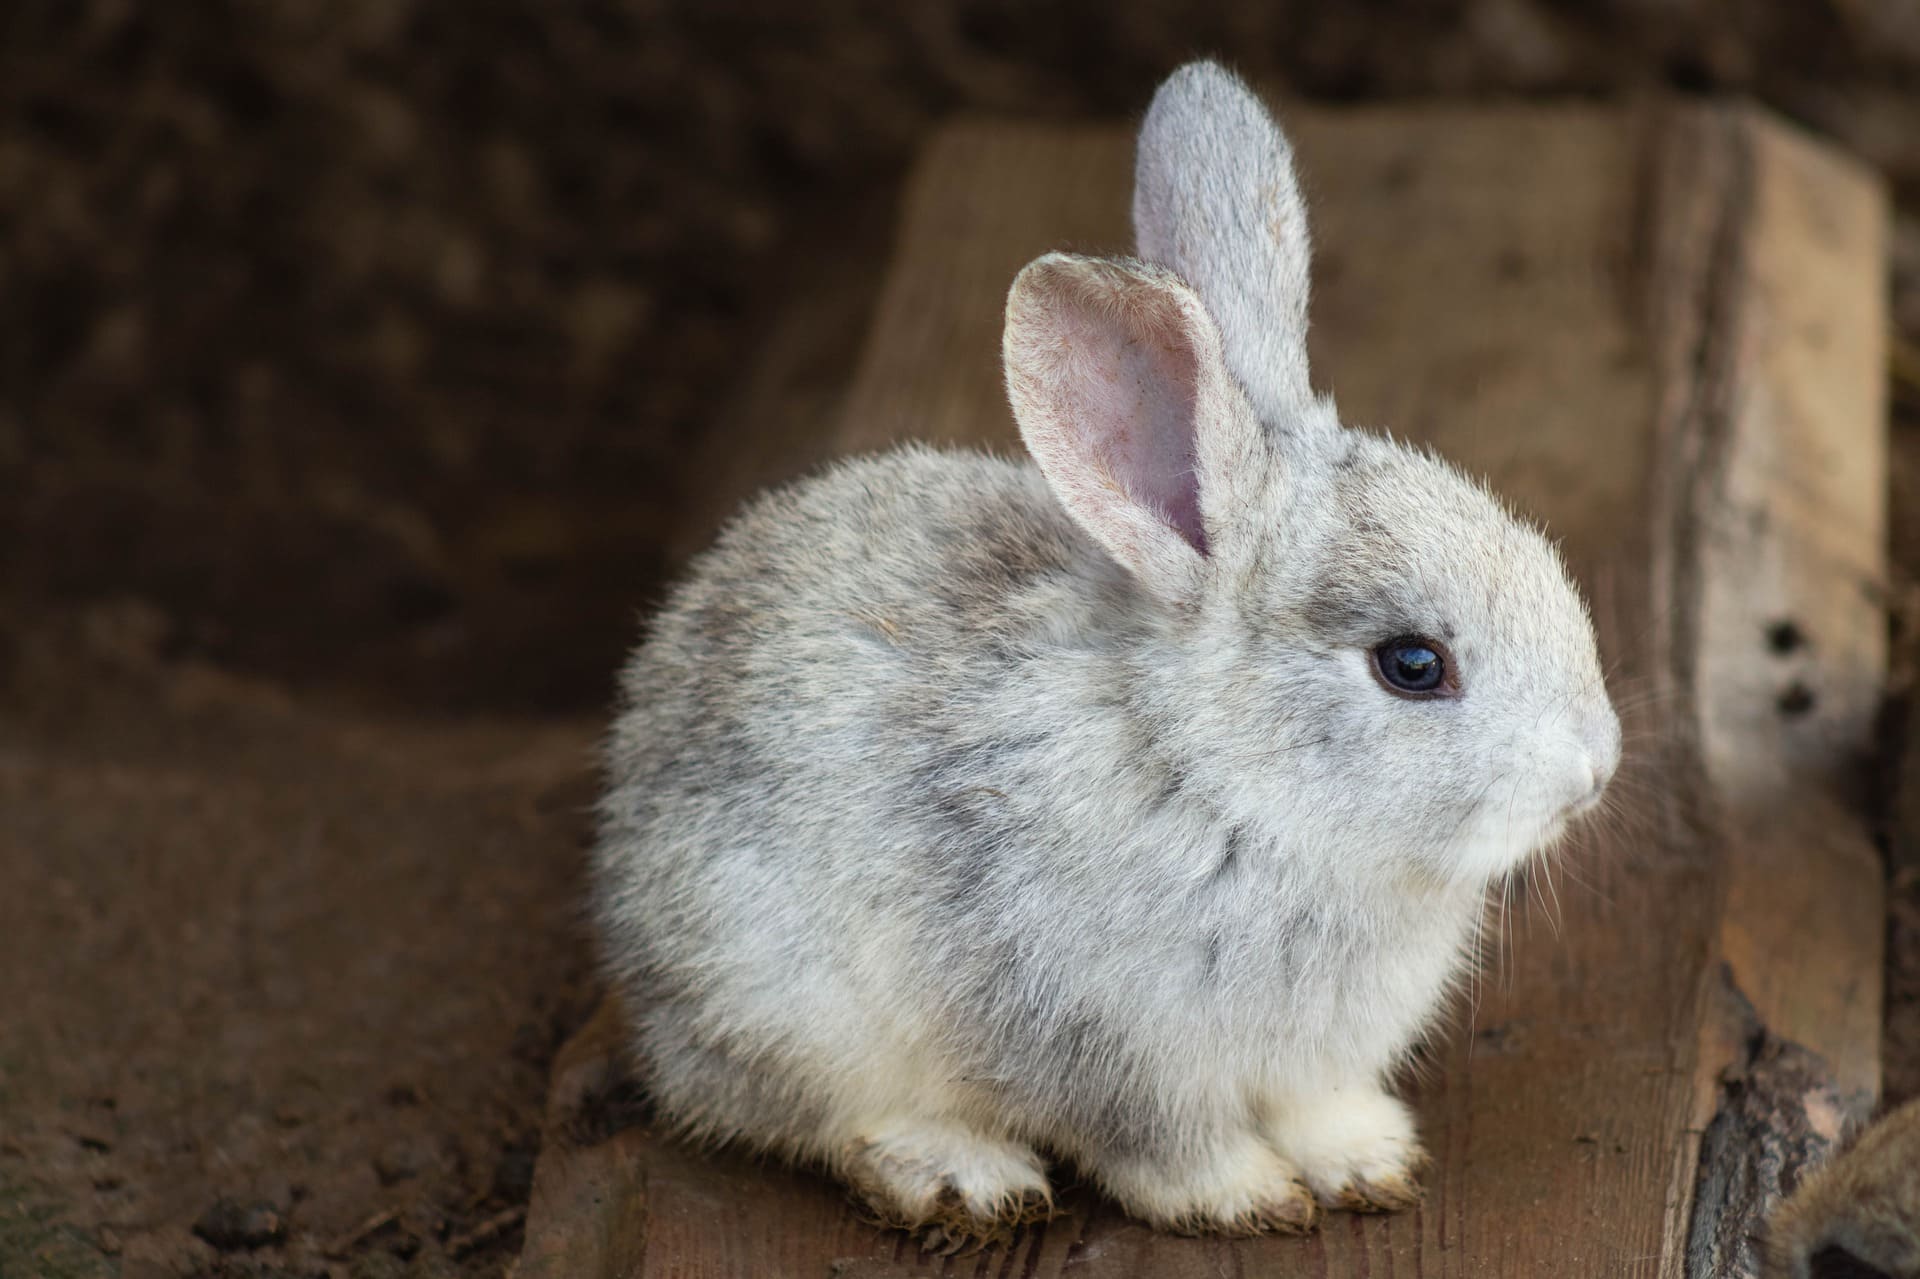 A grey rabbit | Source: Pixabay